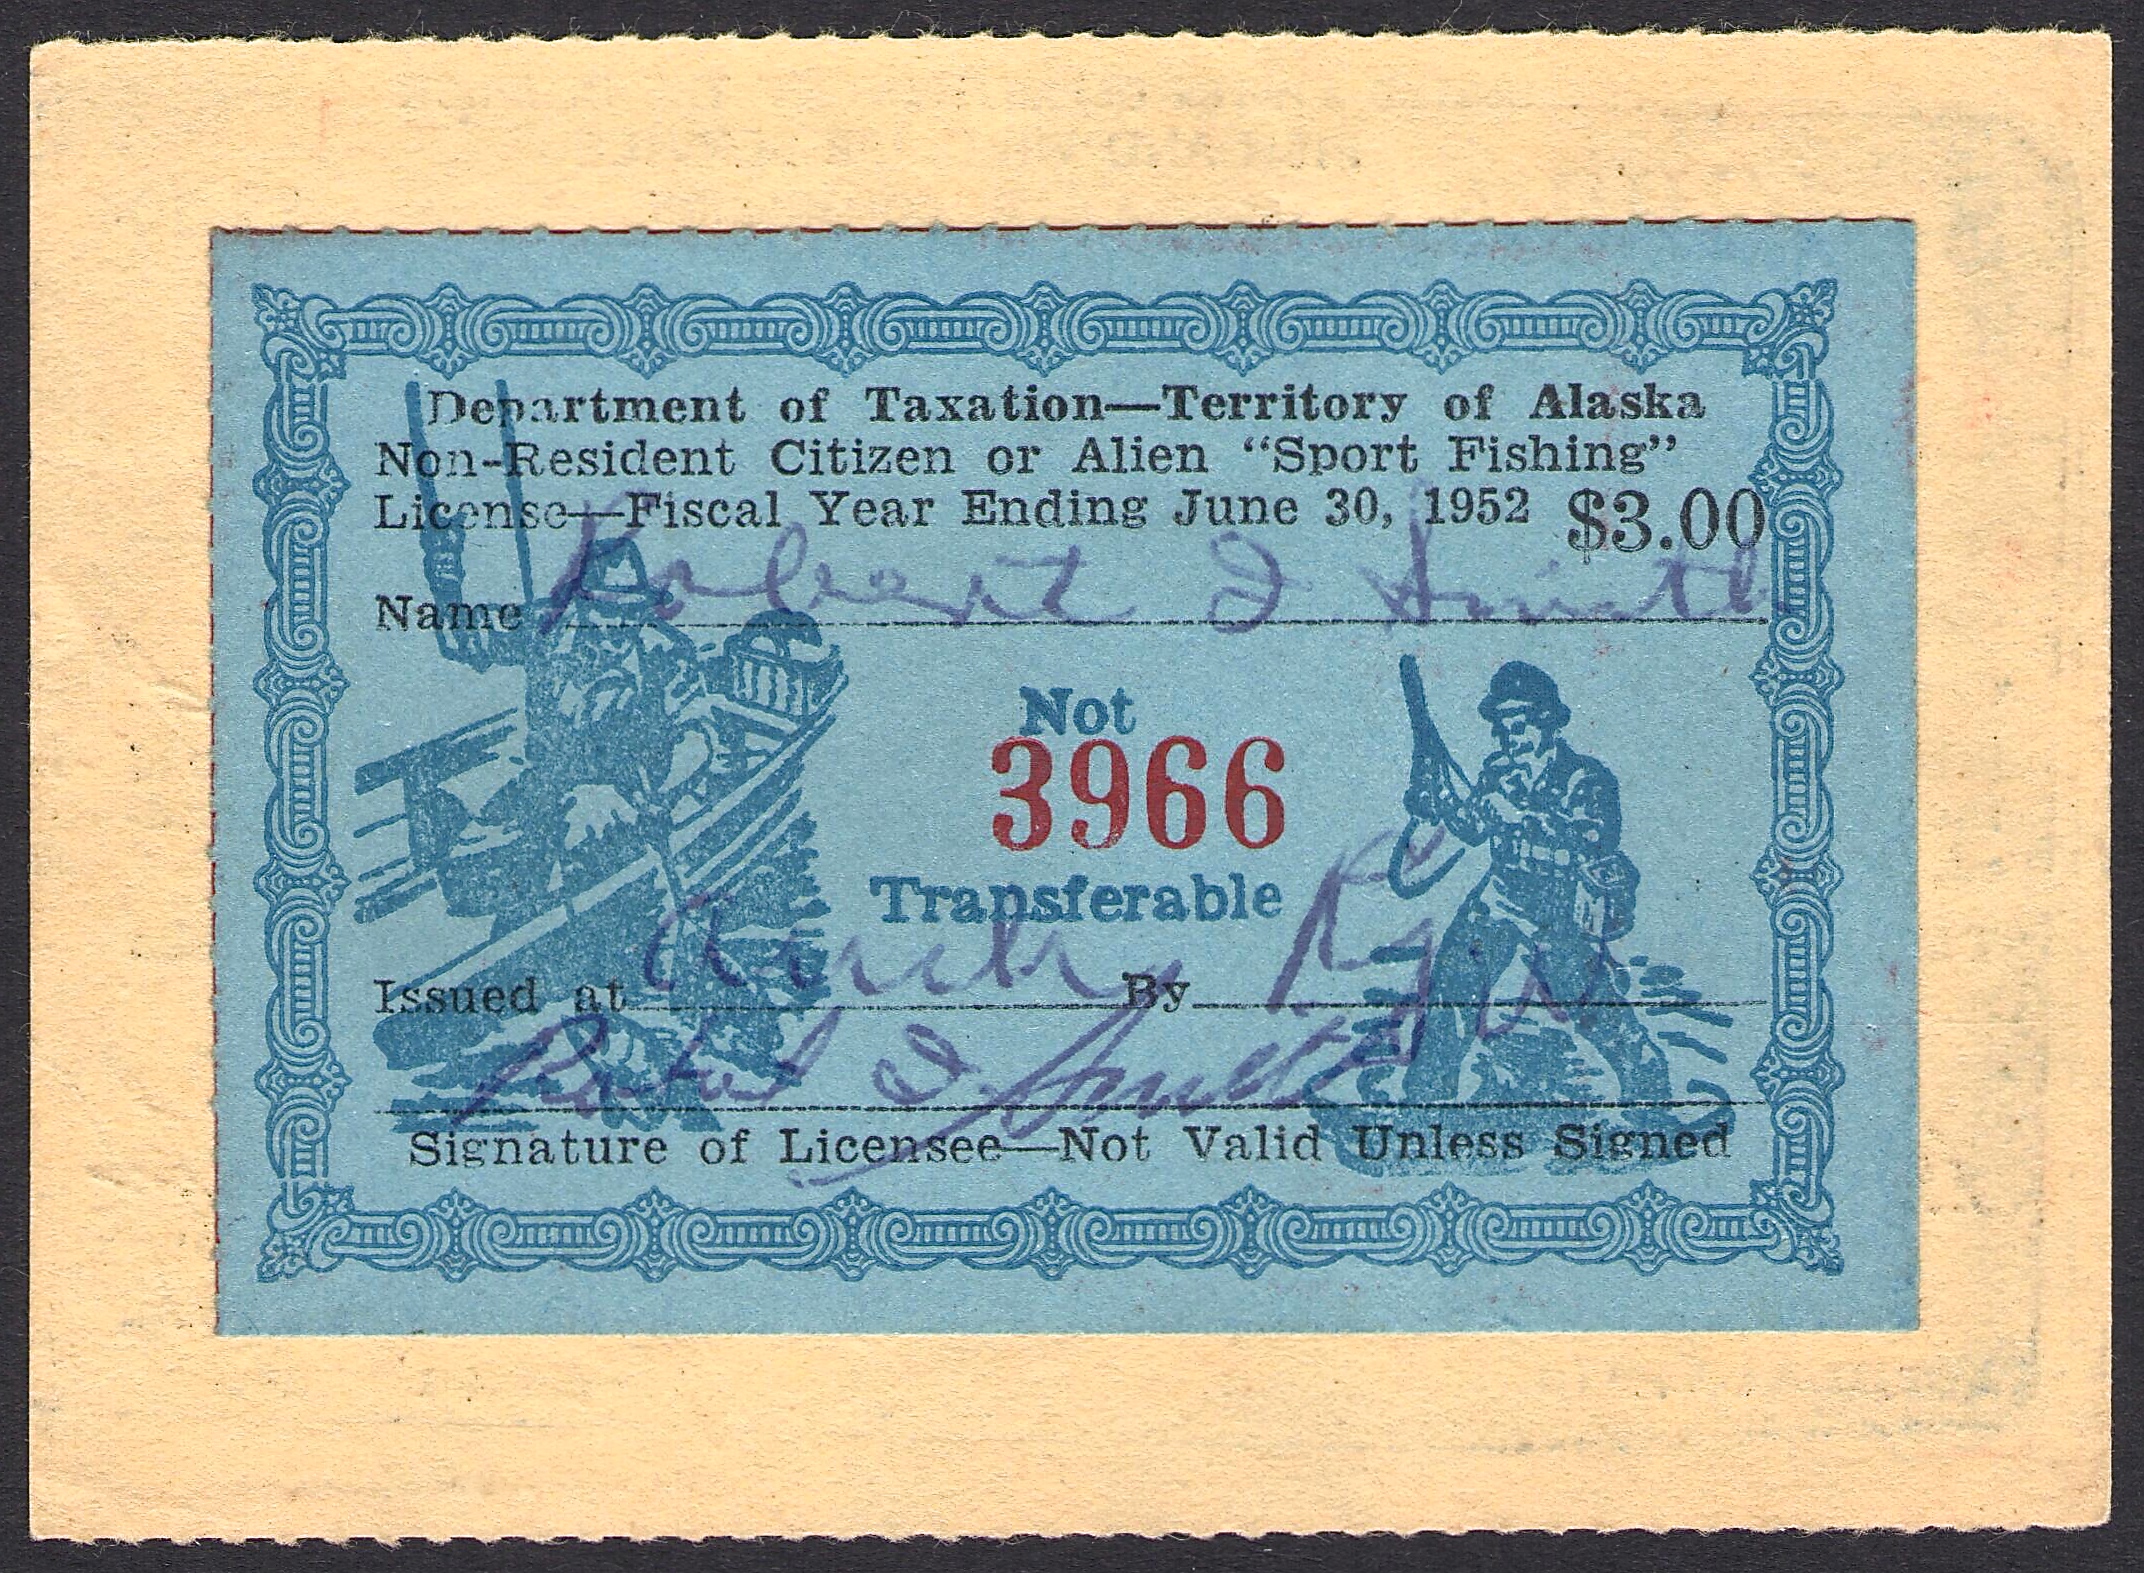 1951-52 Alaska NR or Alien Sport Fishing on License